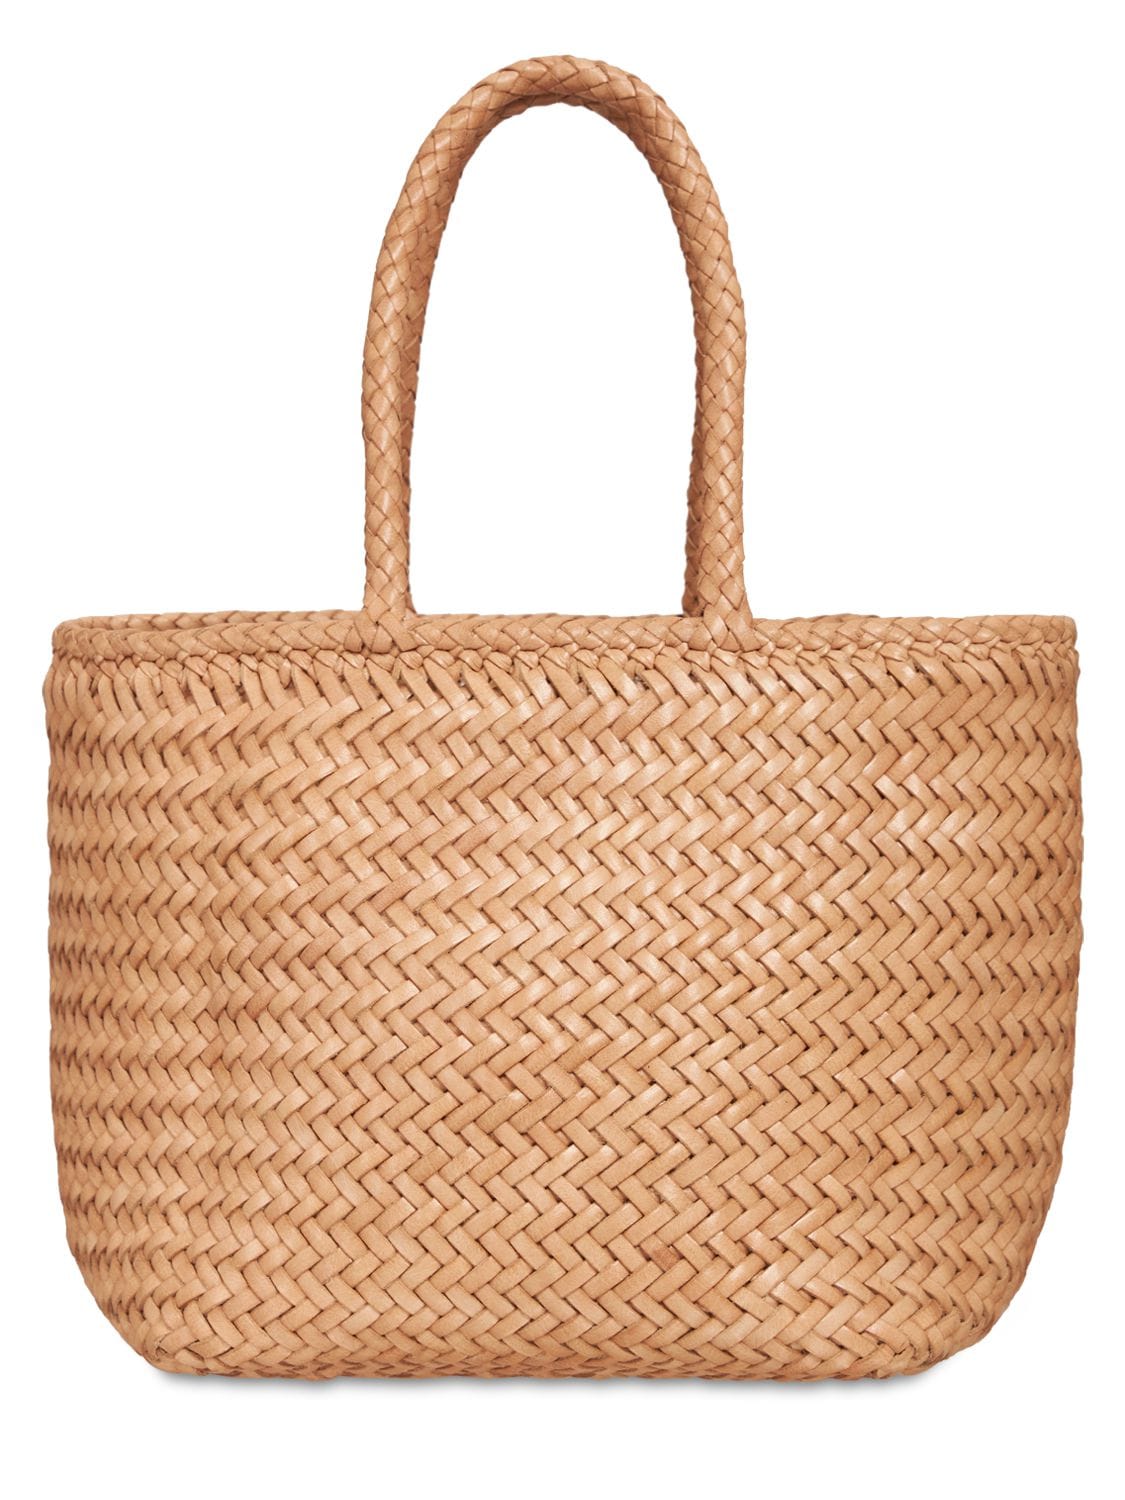 DRAGON DIFFUSION Grace Small Woven Leather Basket Bag